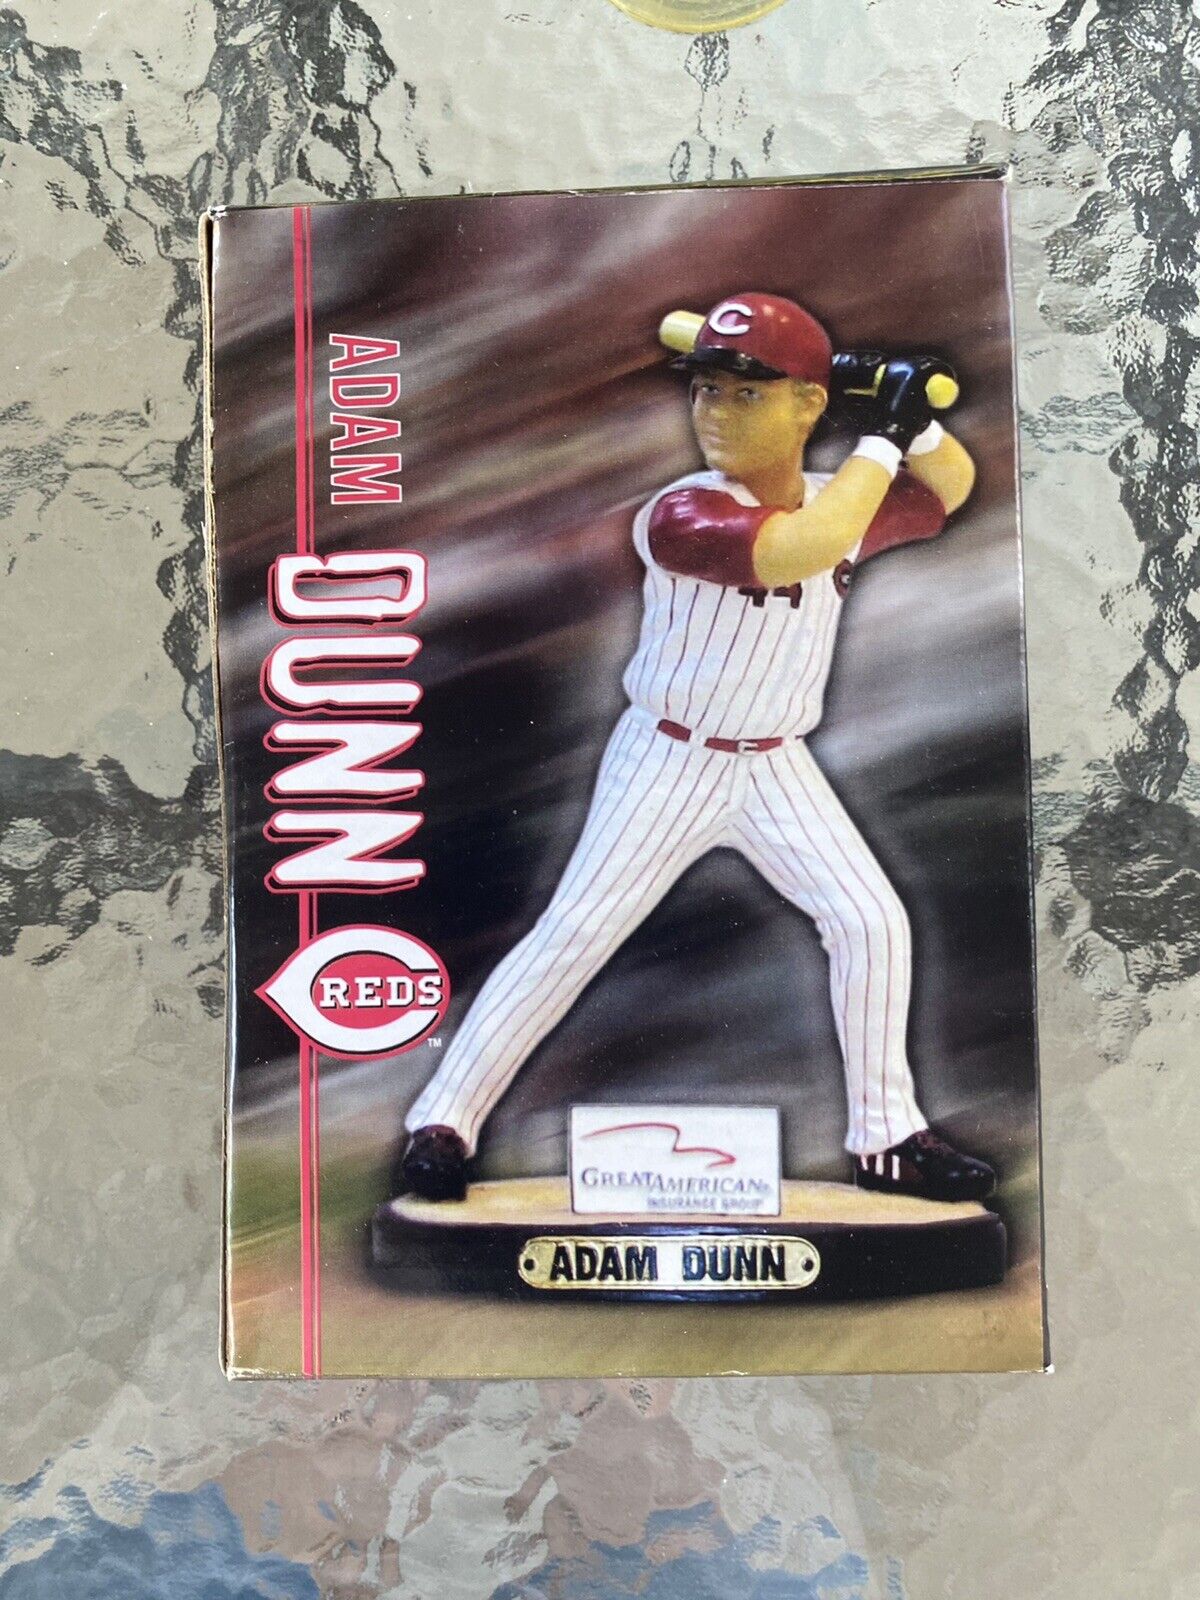 ADAM DUNN Cincinnati Reds Figurine 2006 Stadium Giveaway NIB Great American Ins